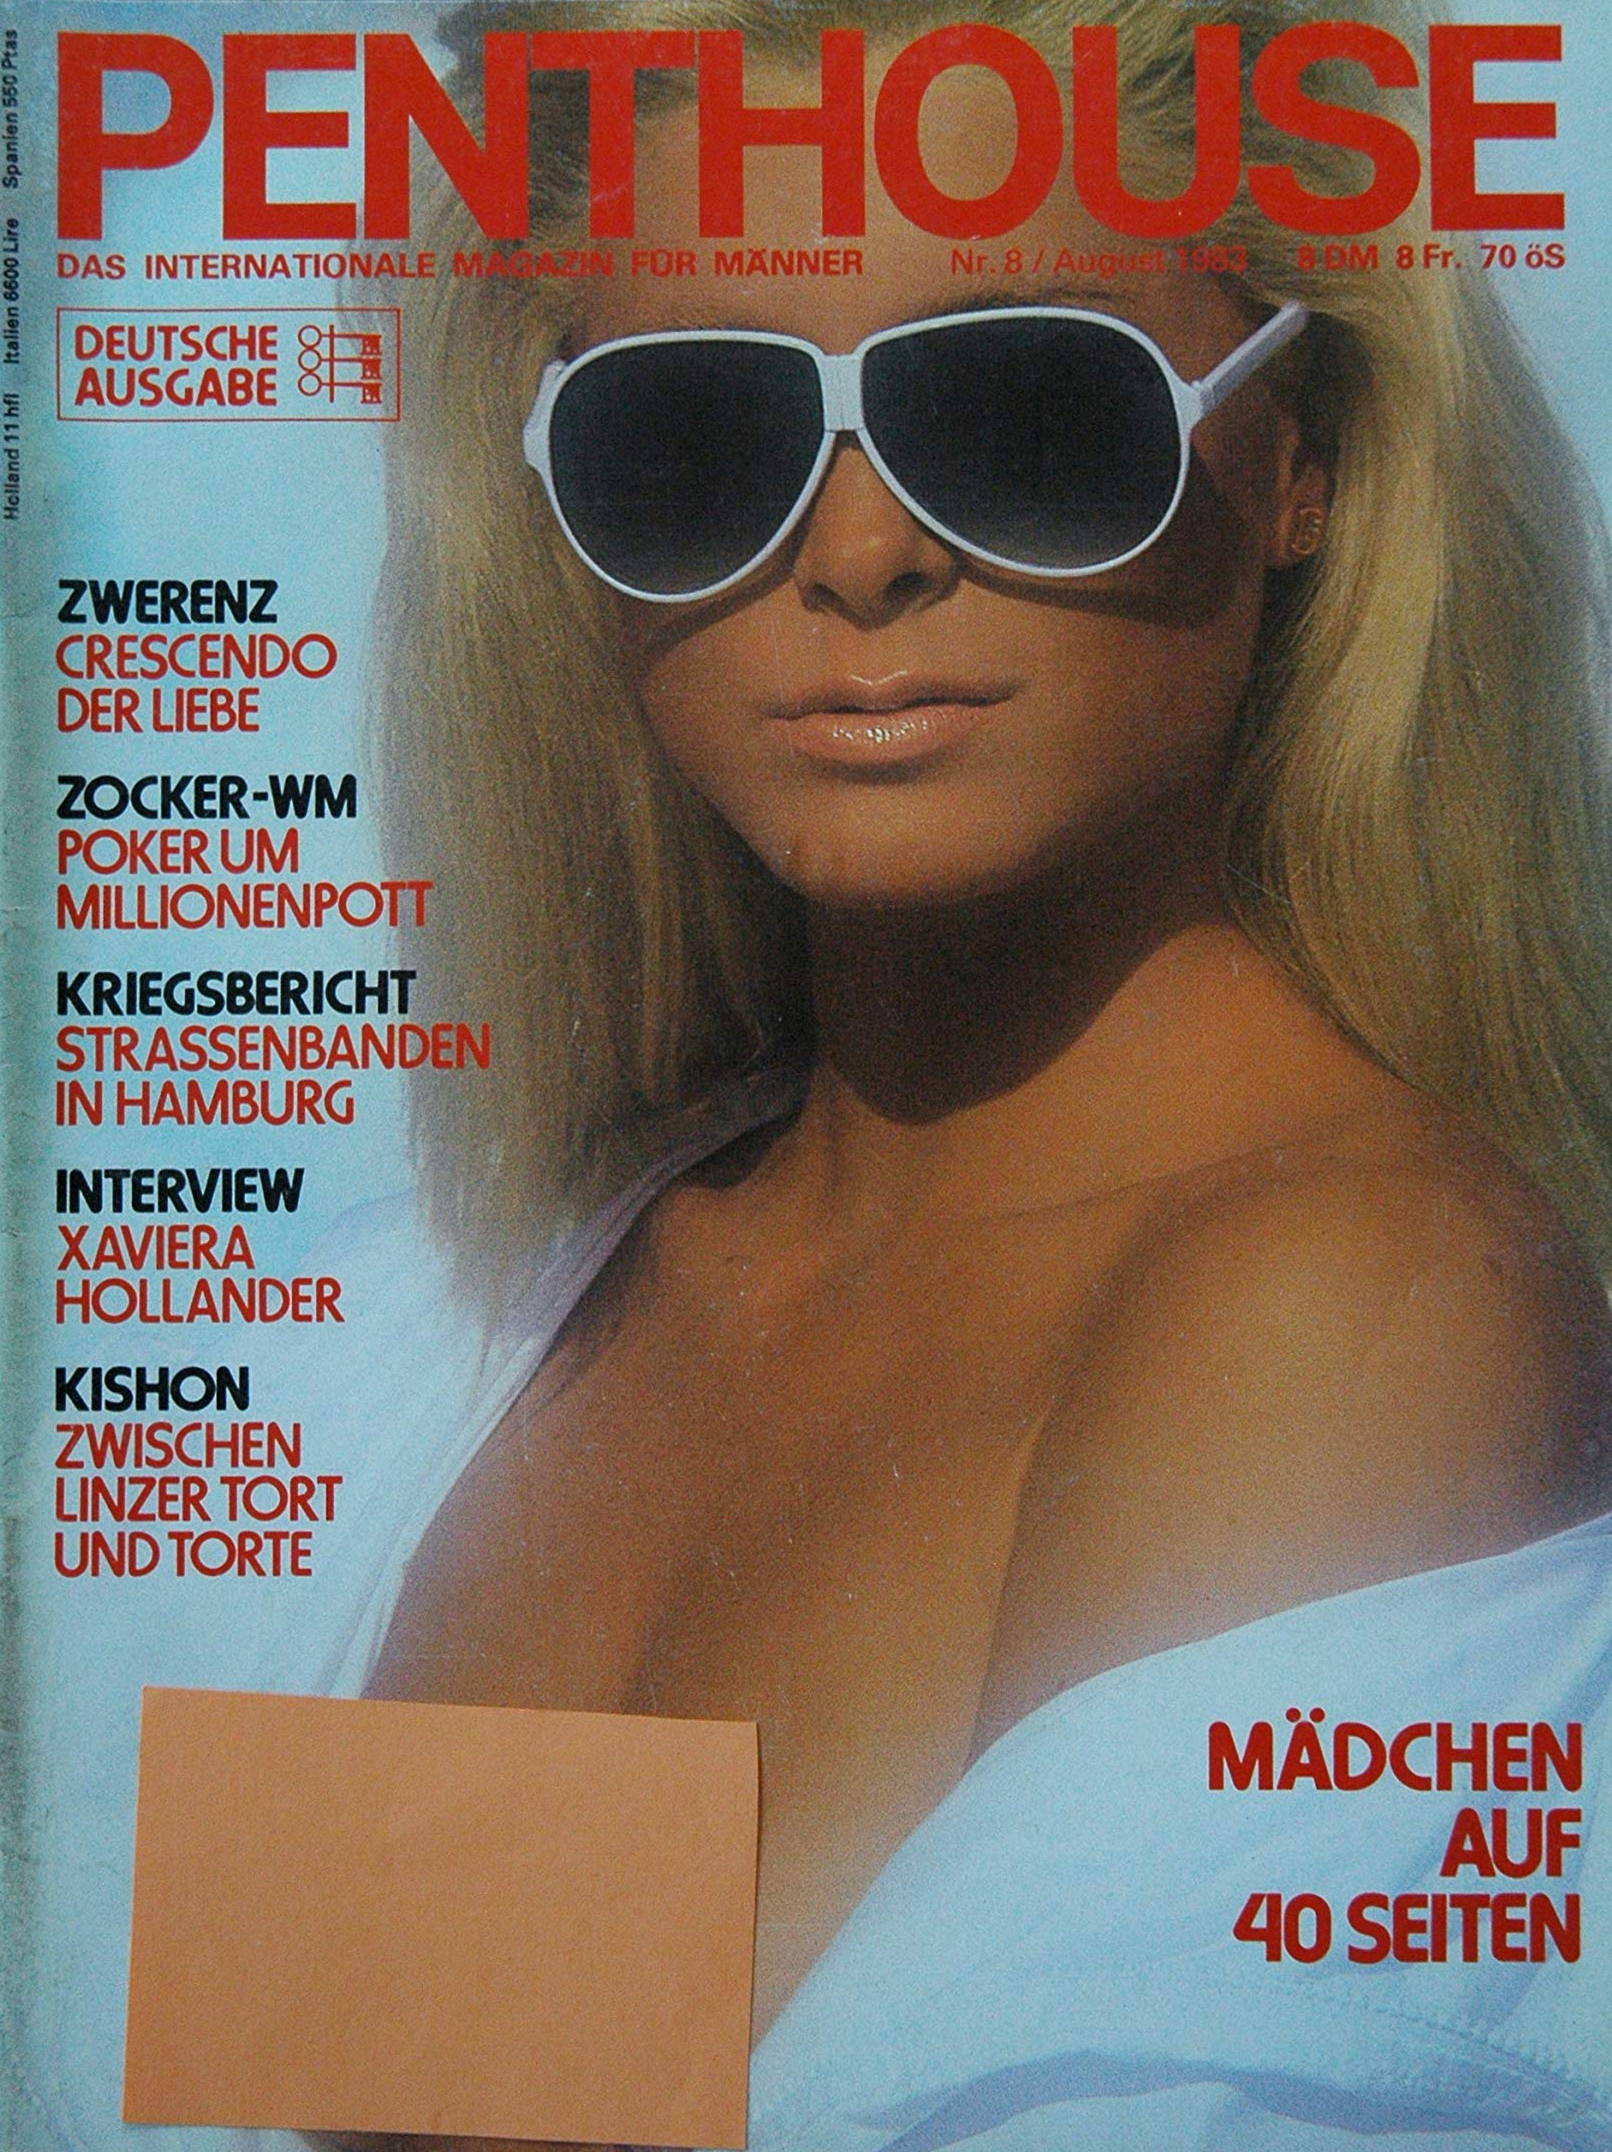 Penthouse (Germany) August 1983 magazine back issue Penthouse (Germany) magizine back copy Penthouse (Germany) August 1983 Magazine Back Issue Published by Penthouse Publishing, Bob Guccione. Zwerenz Crescendo Der Liebe.